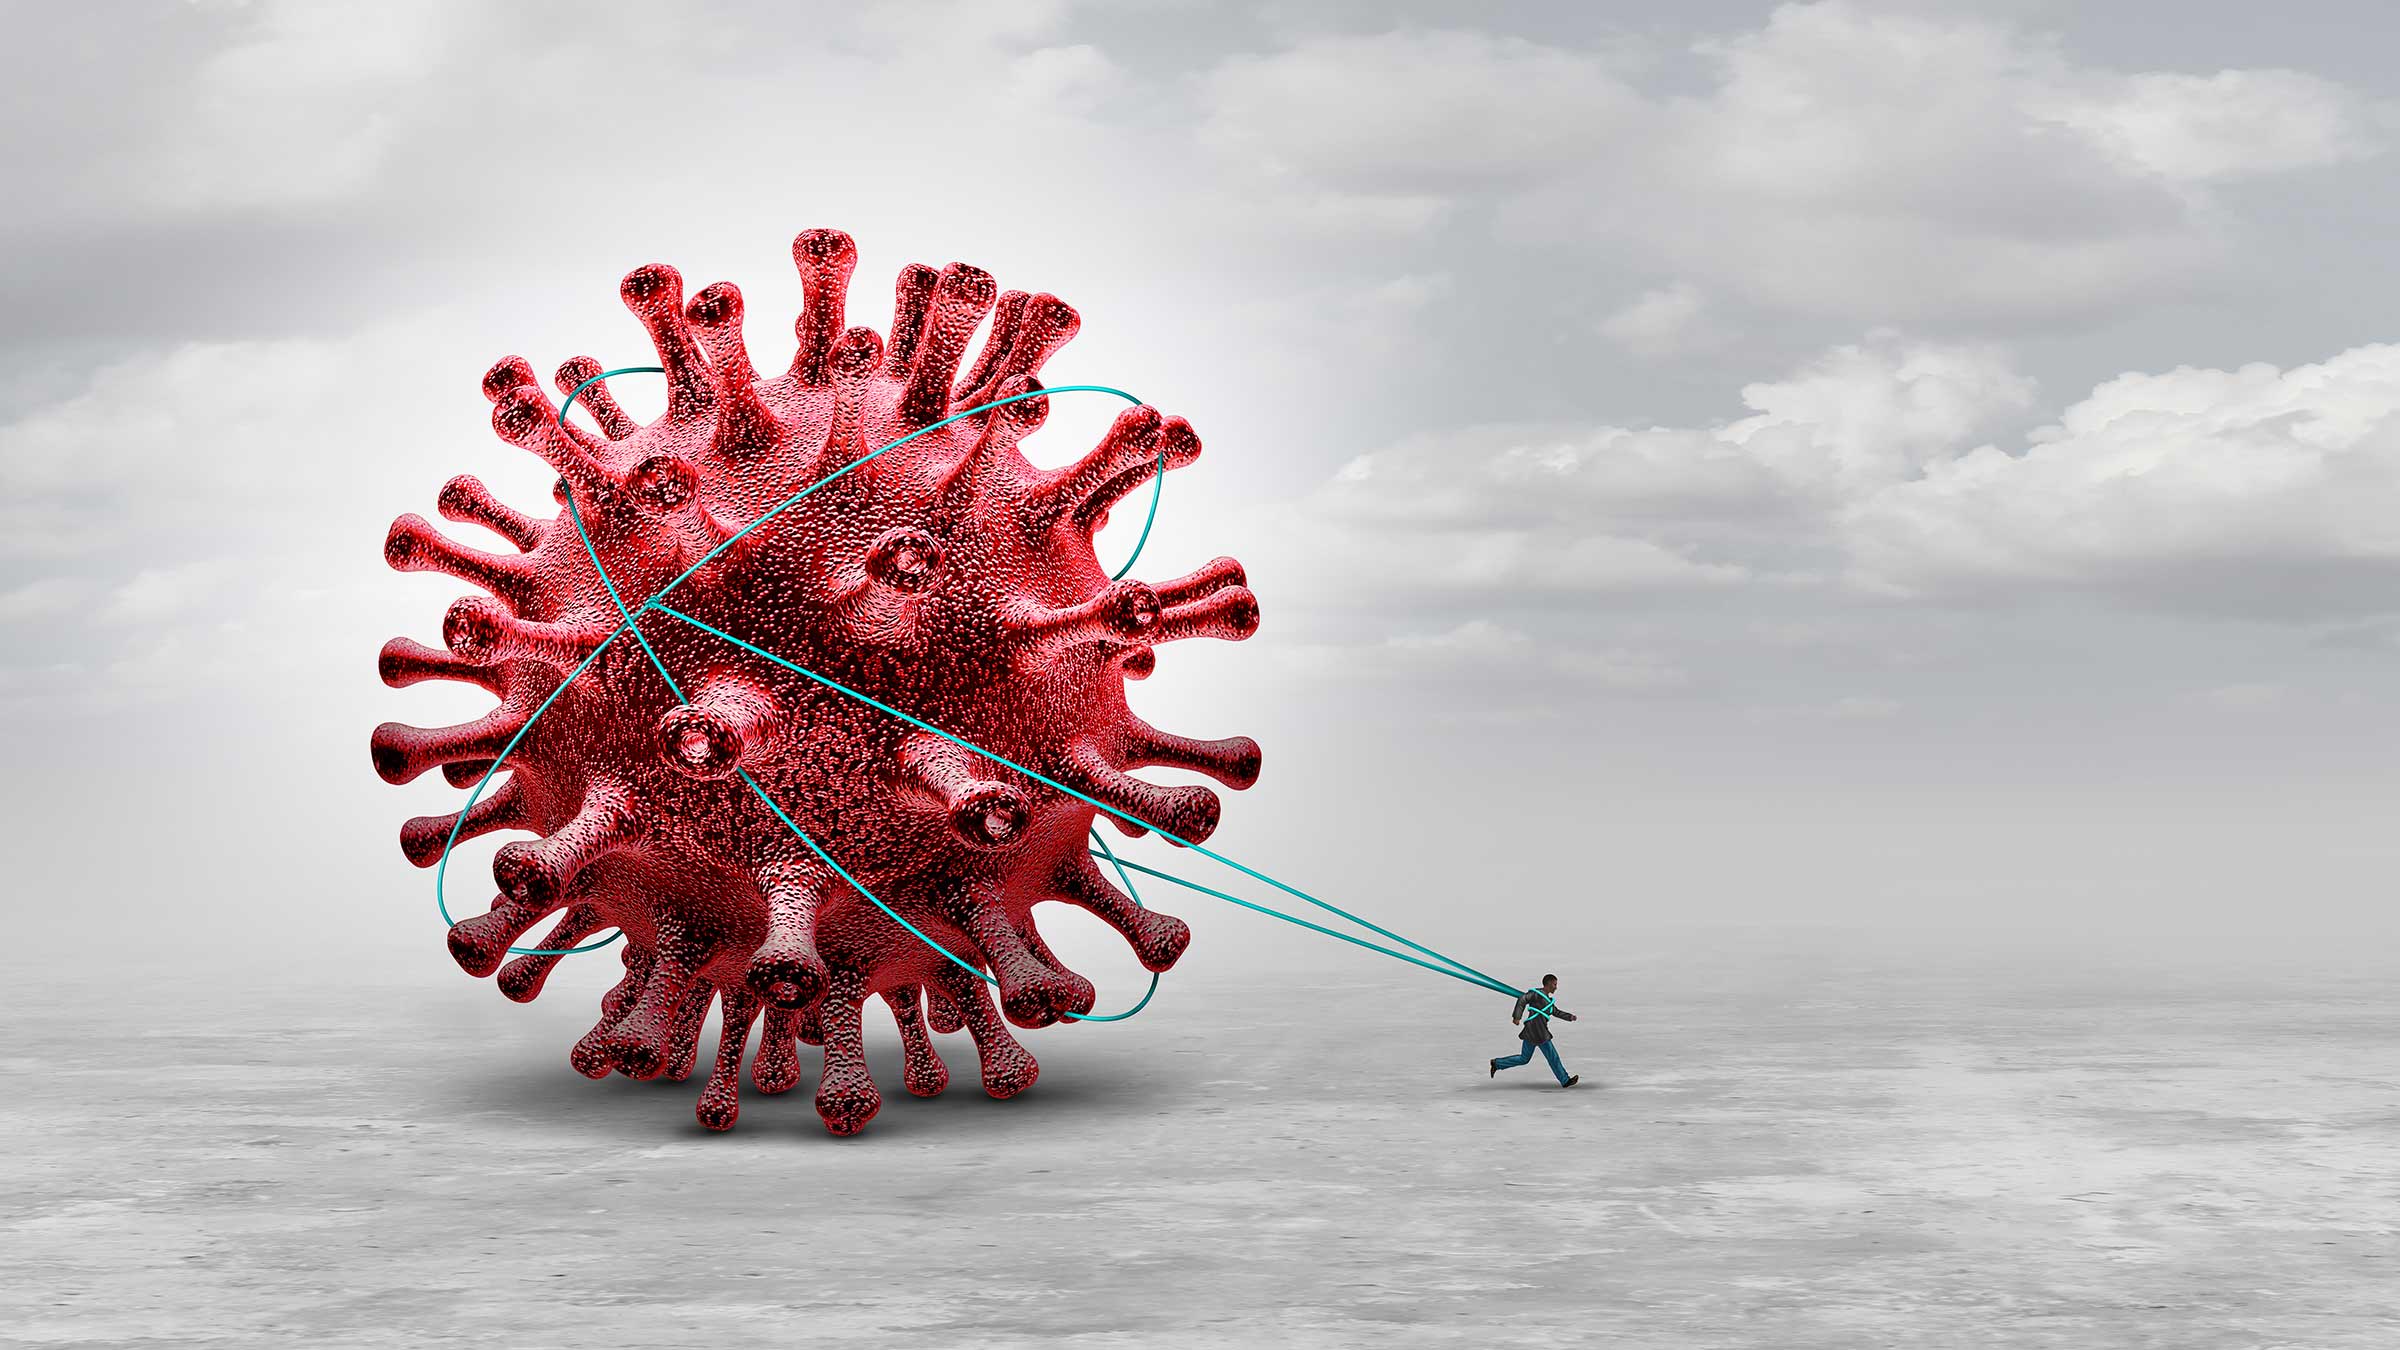 Cartoon man tied to a large representation of the SARS-CoV-2 virus